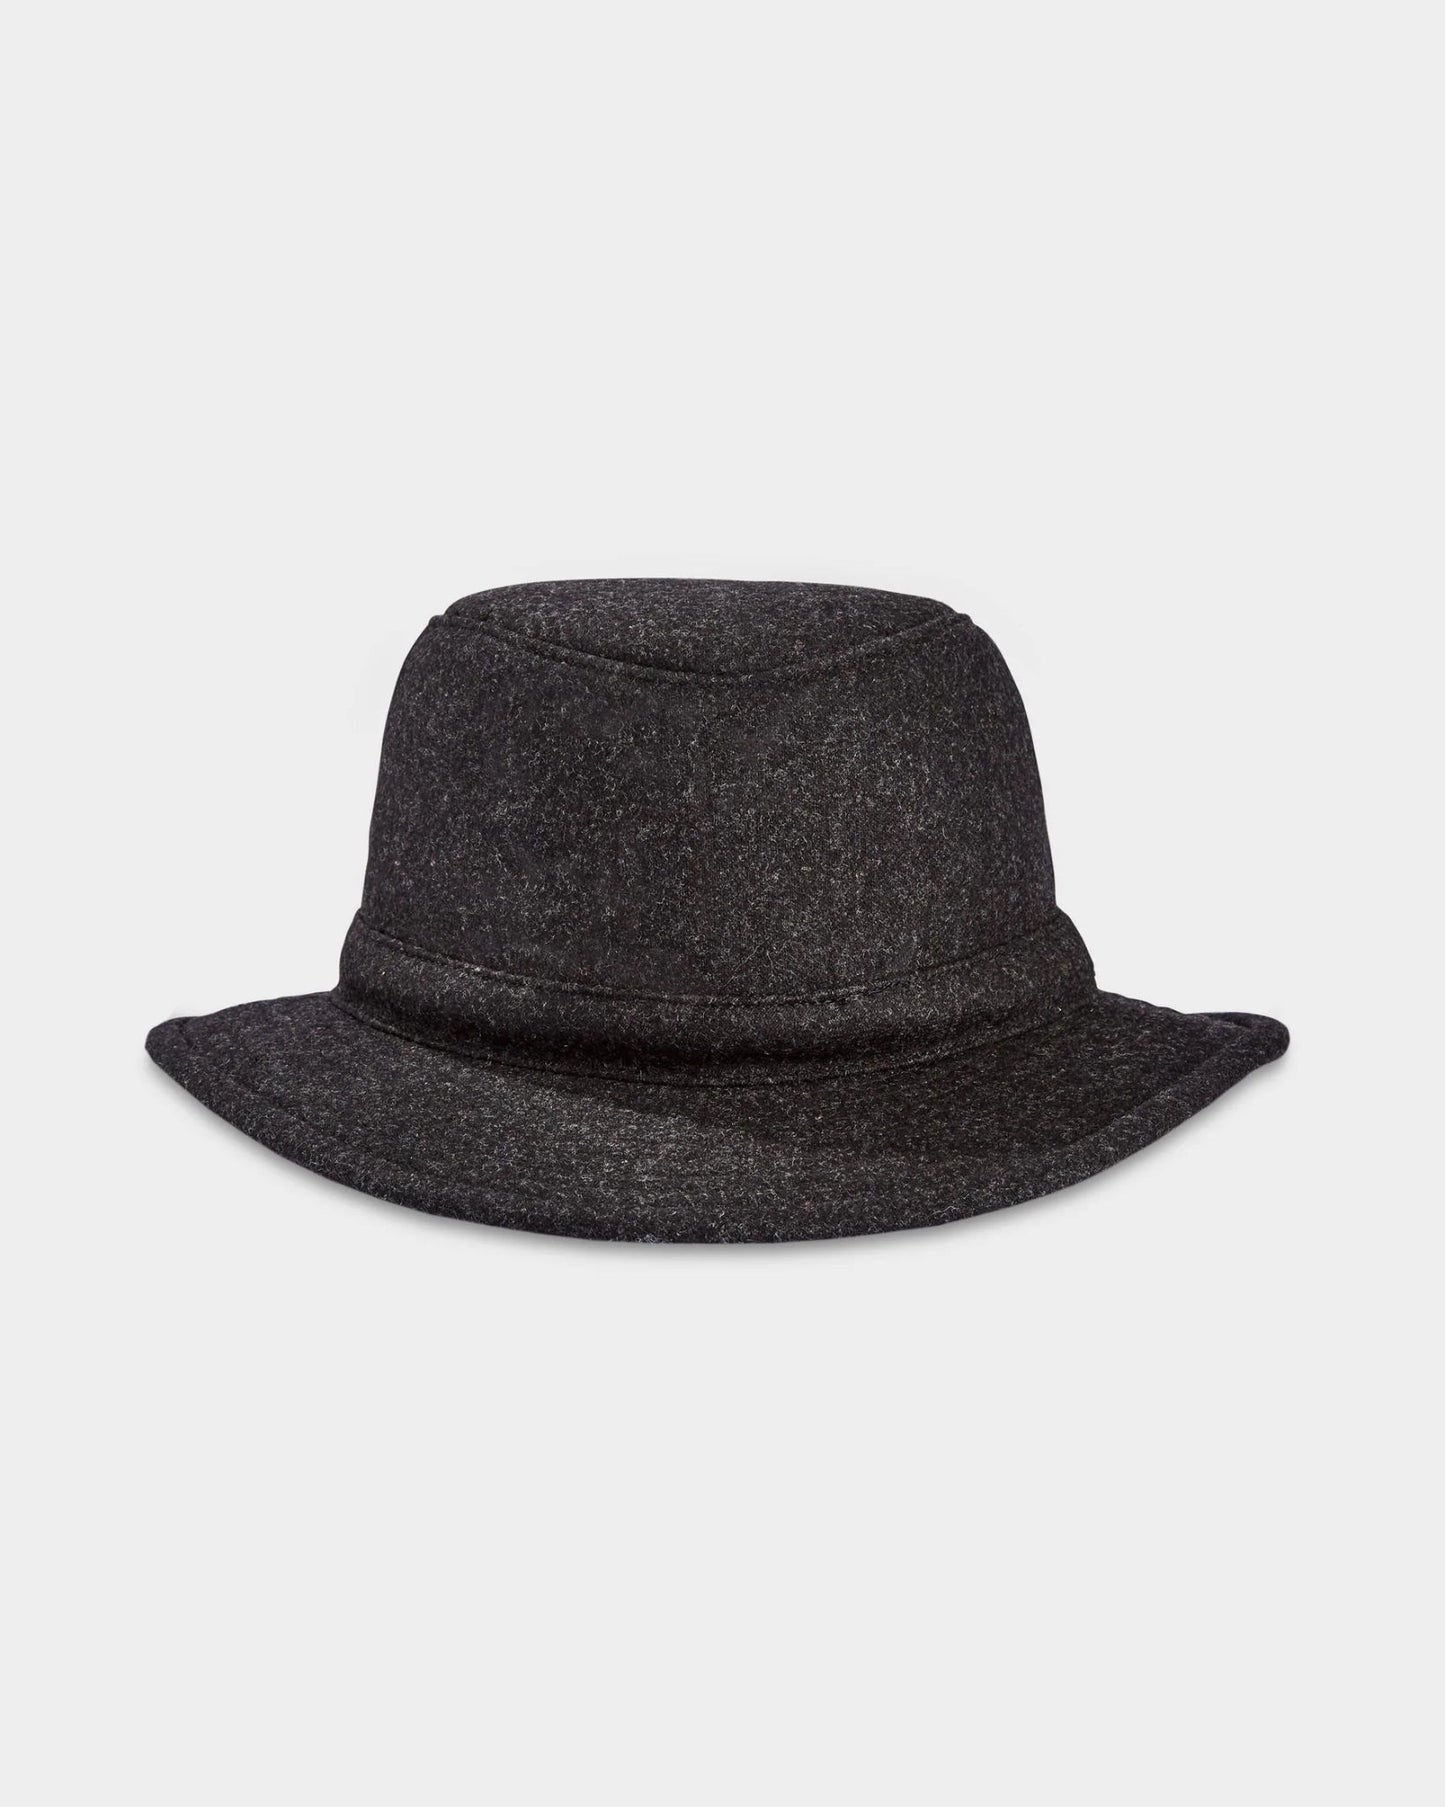 TTW2 Tec Wool Hat - Black